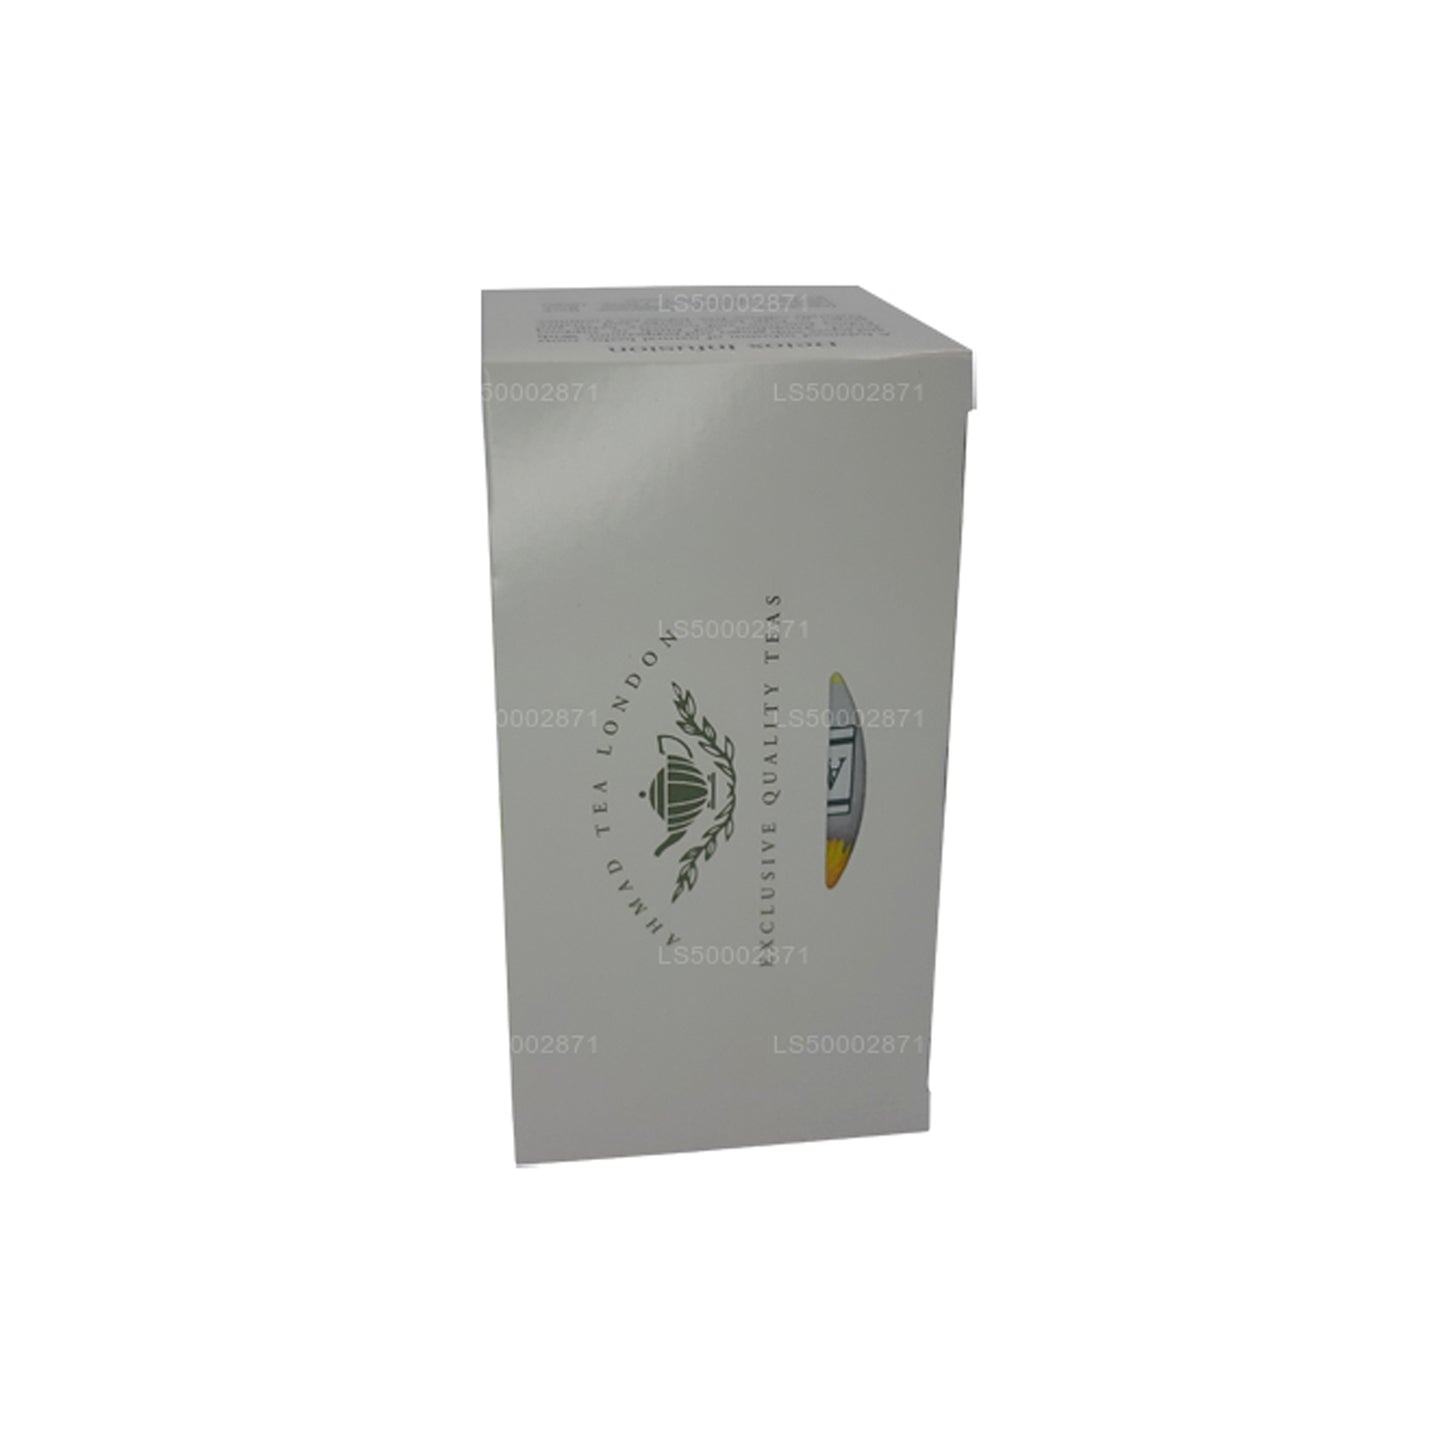 Ahmad Tea Detox Cleanse (20 Tea Bag)